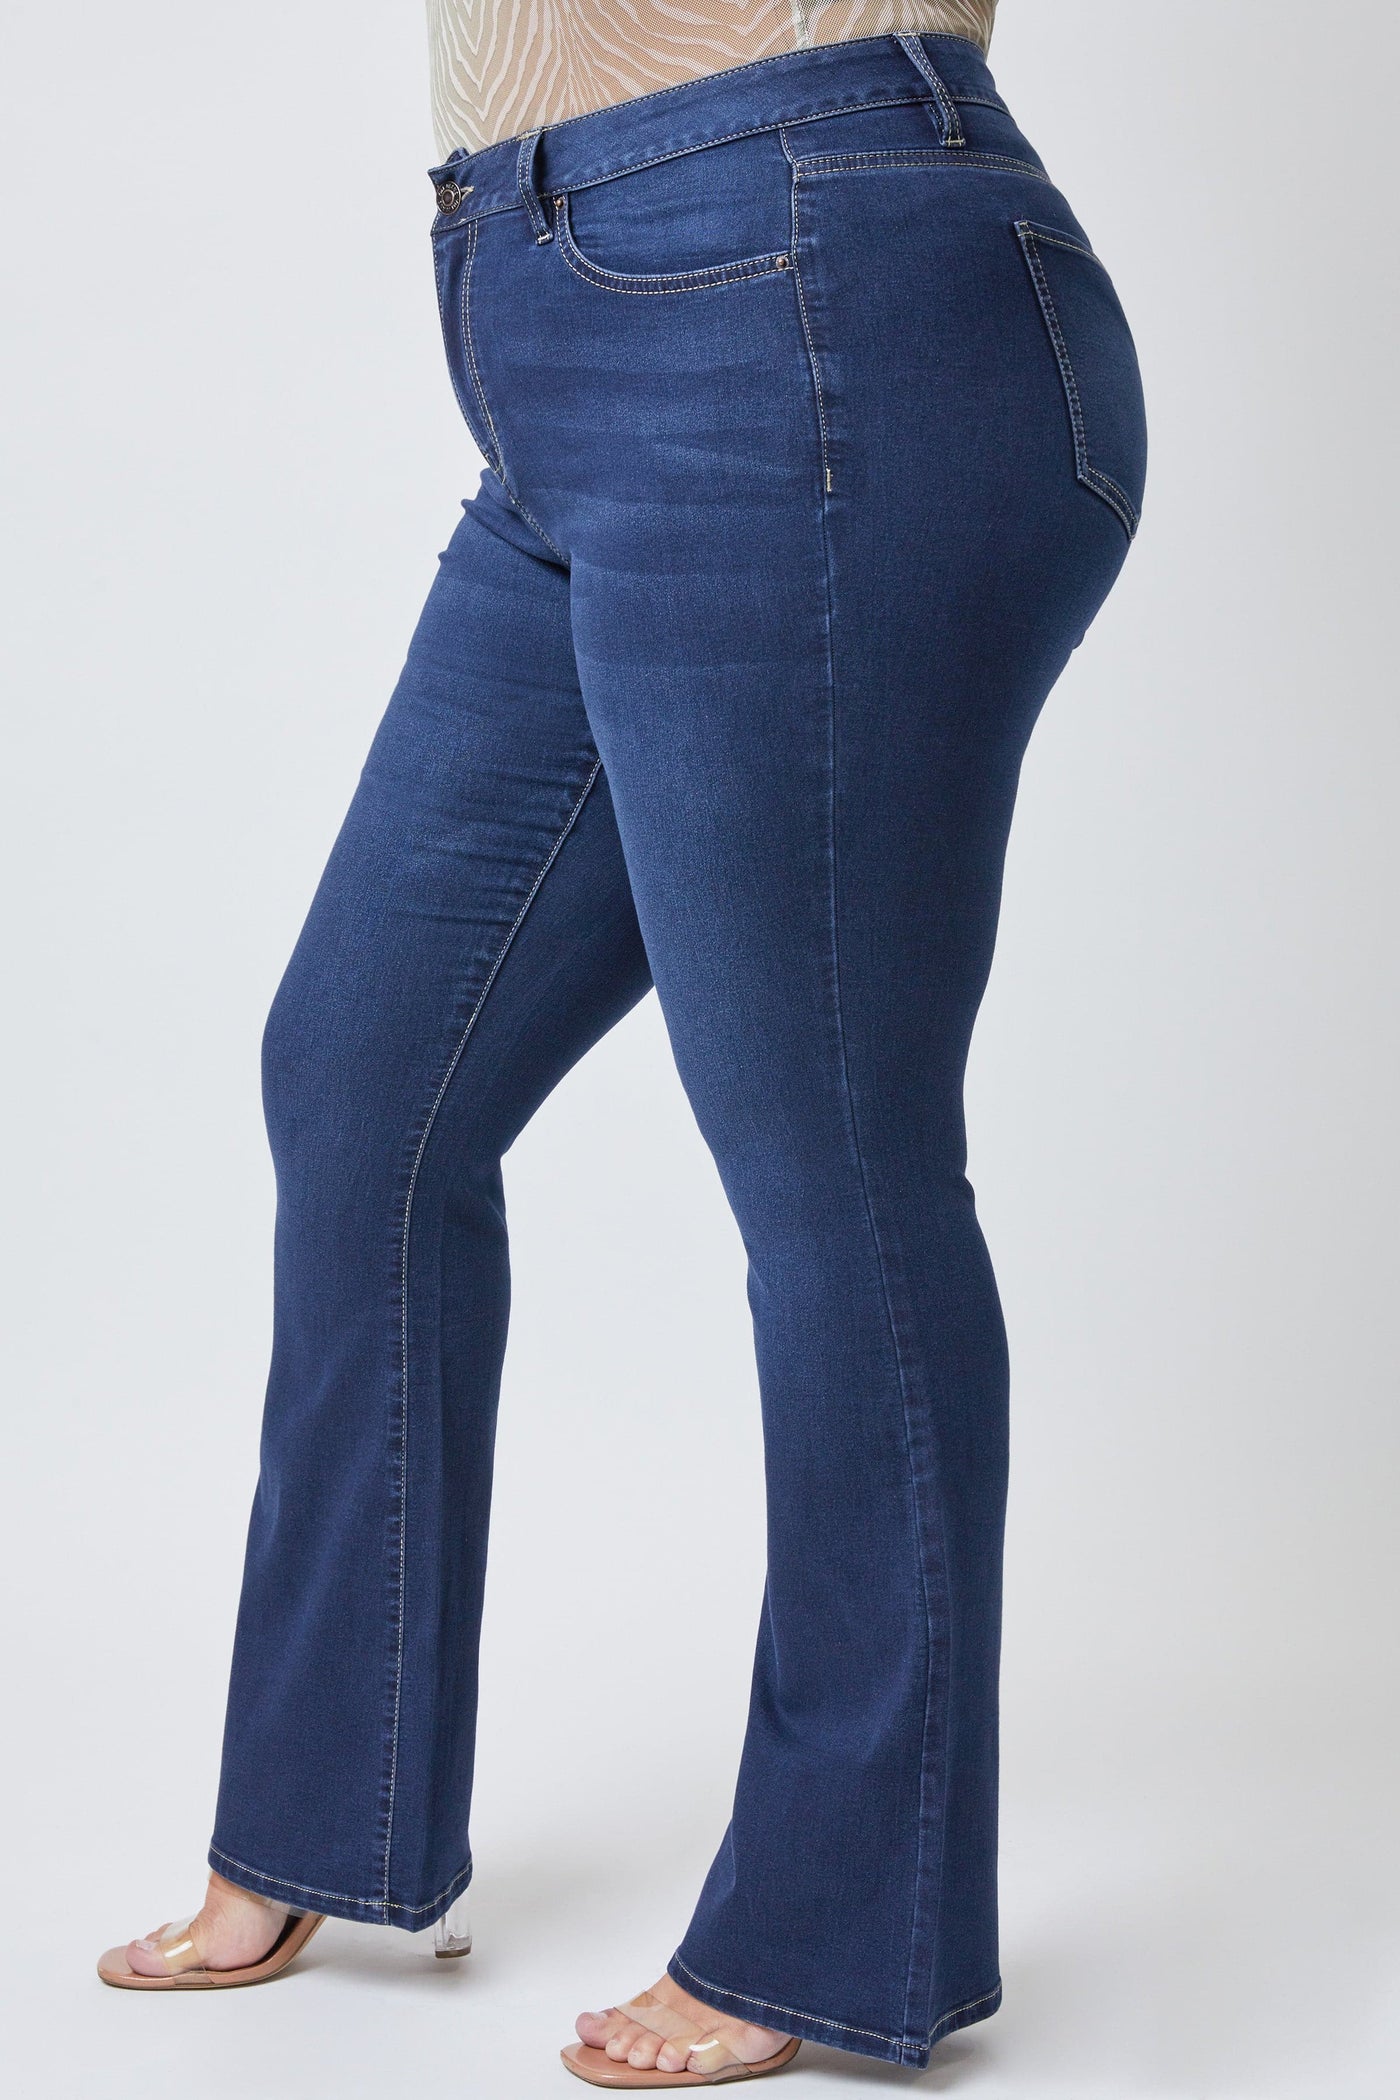 Junior Plus Size Hyper Denim Super Stretchy Flare Jean